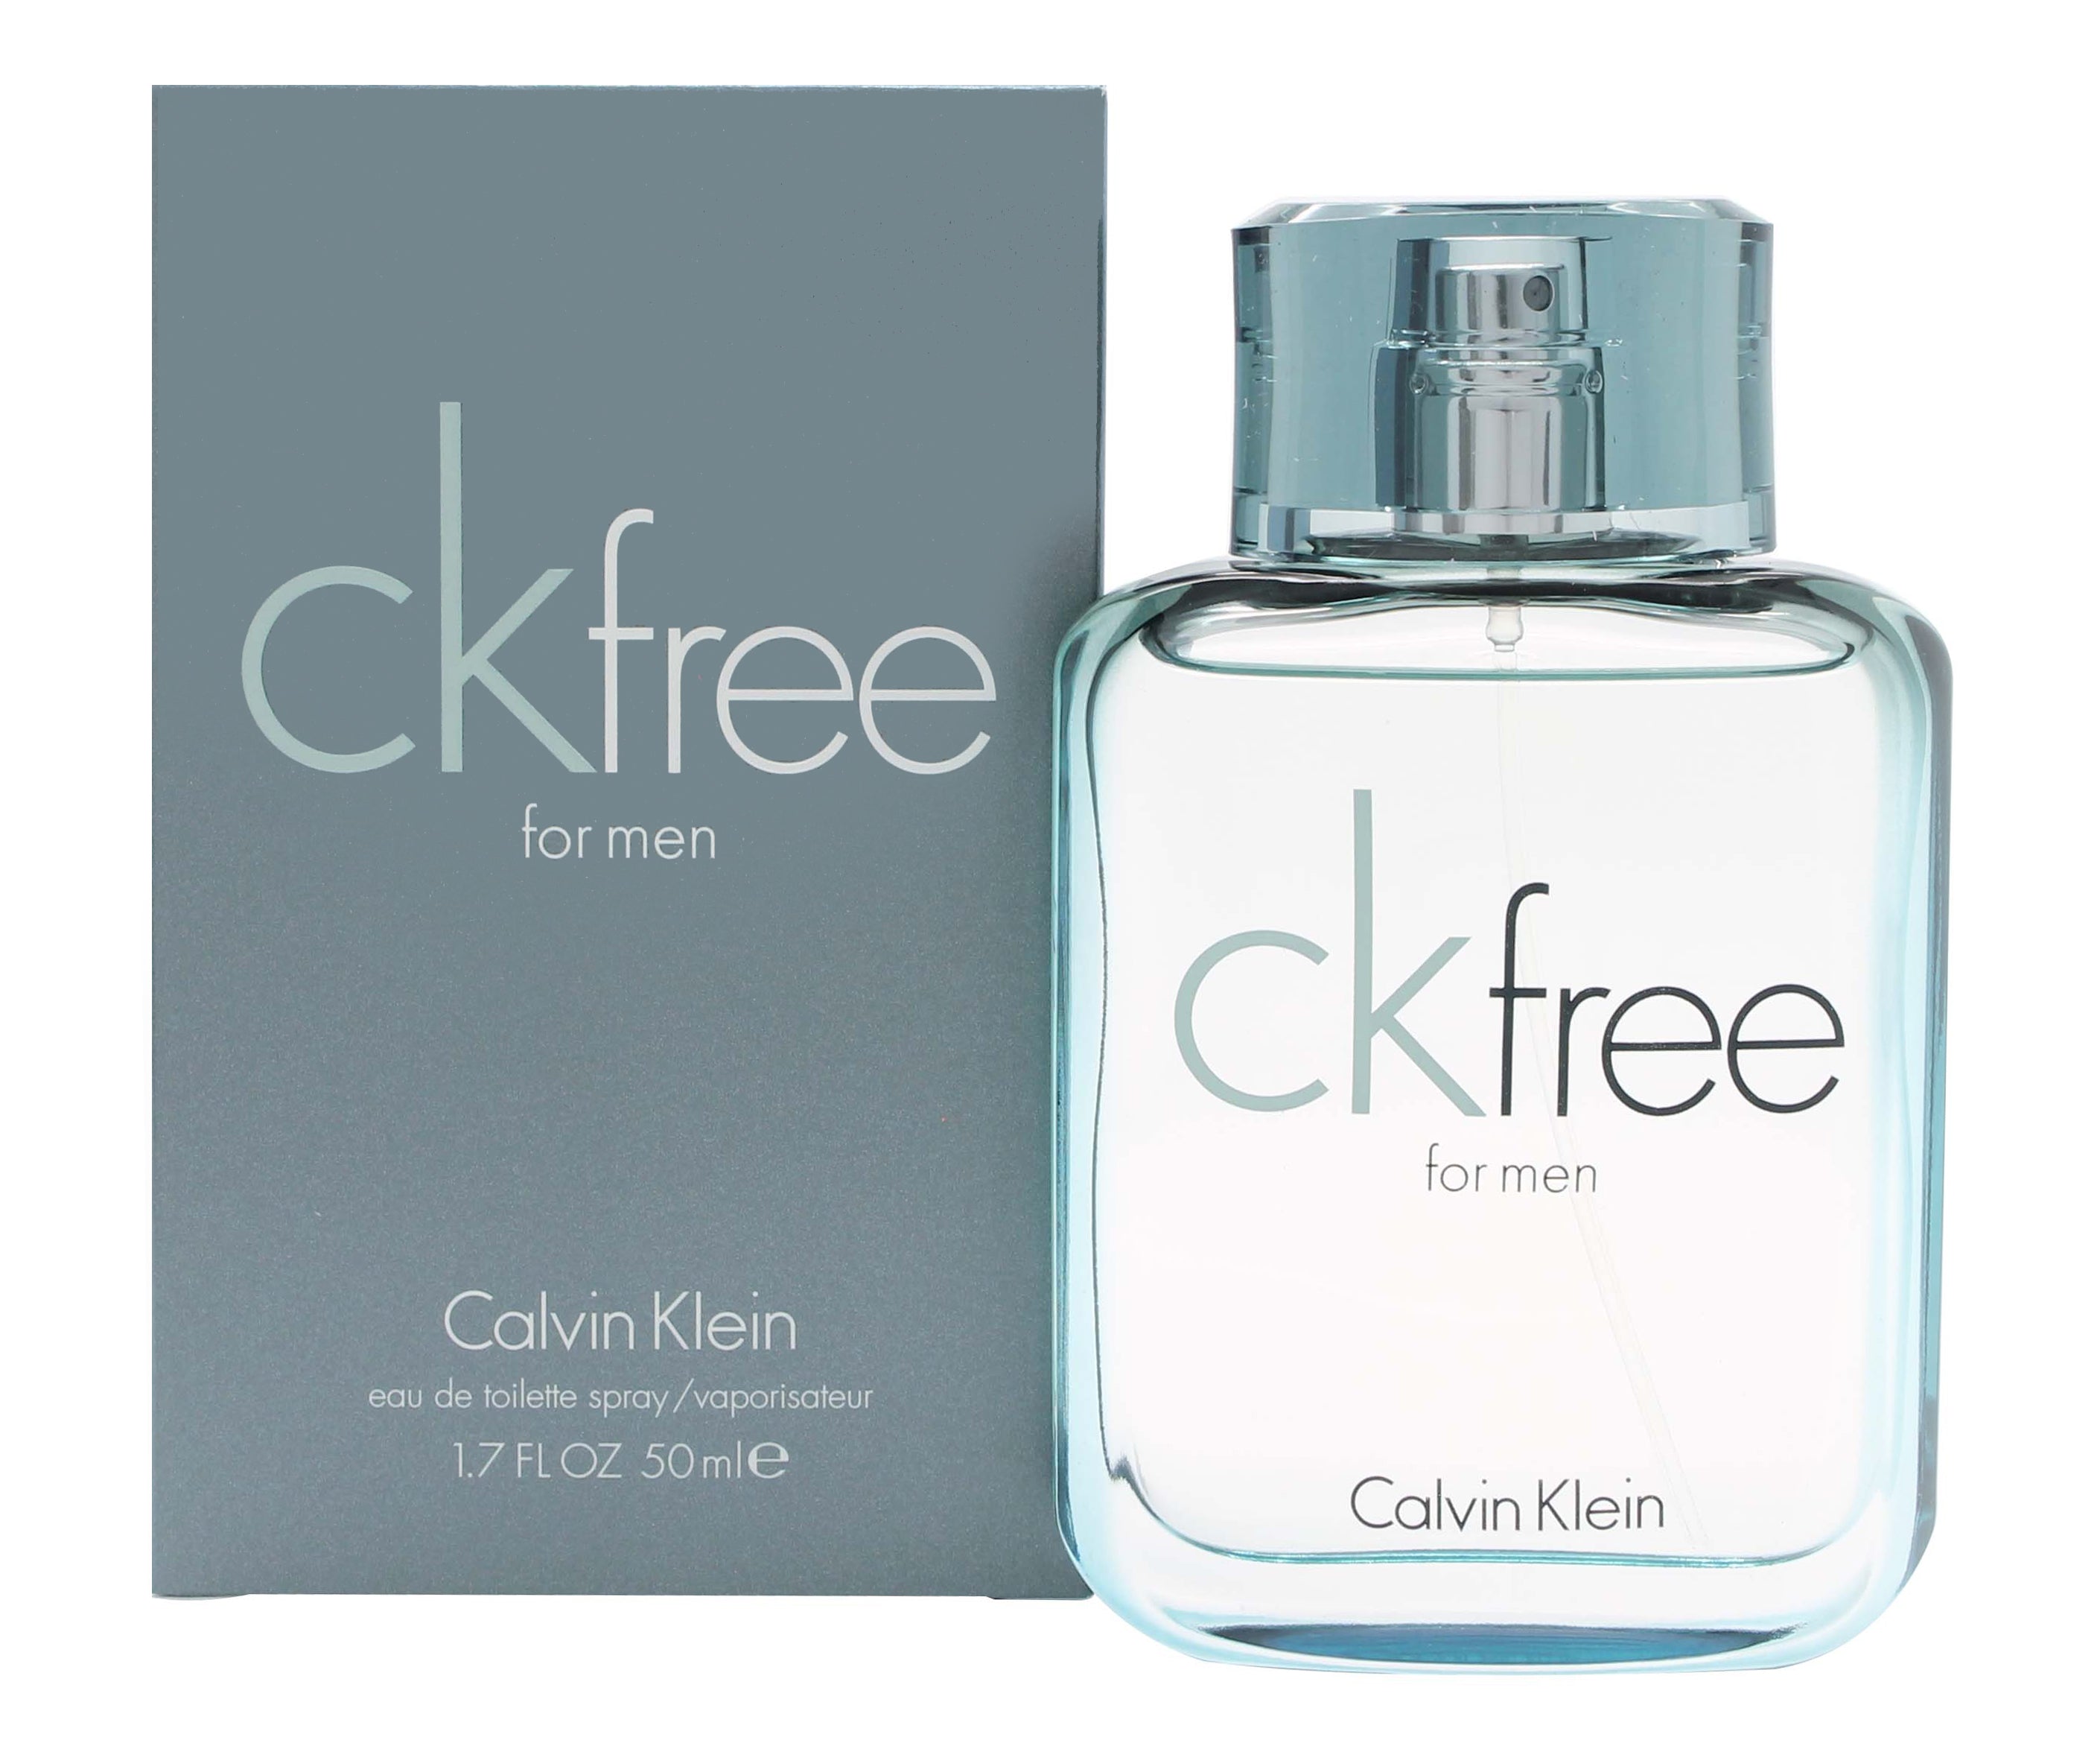 View Calvin Klein CK Free Eau De Toilette 50ml Spray information